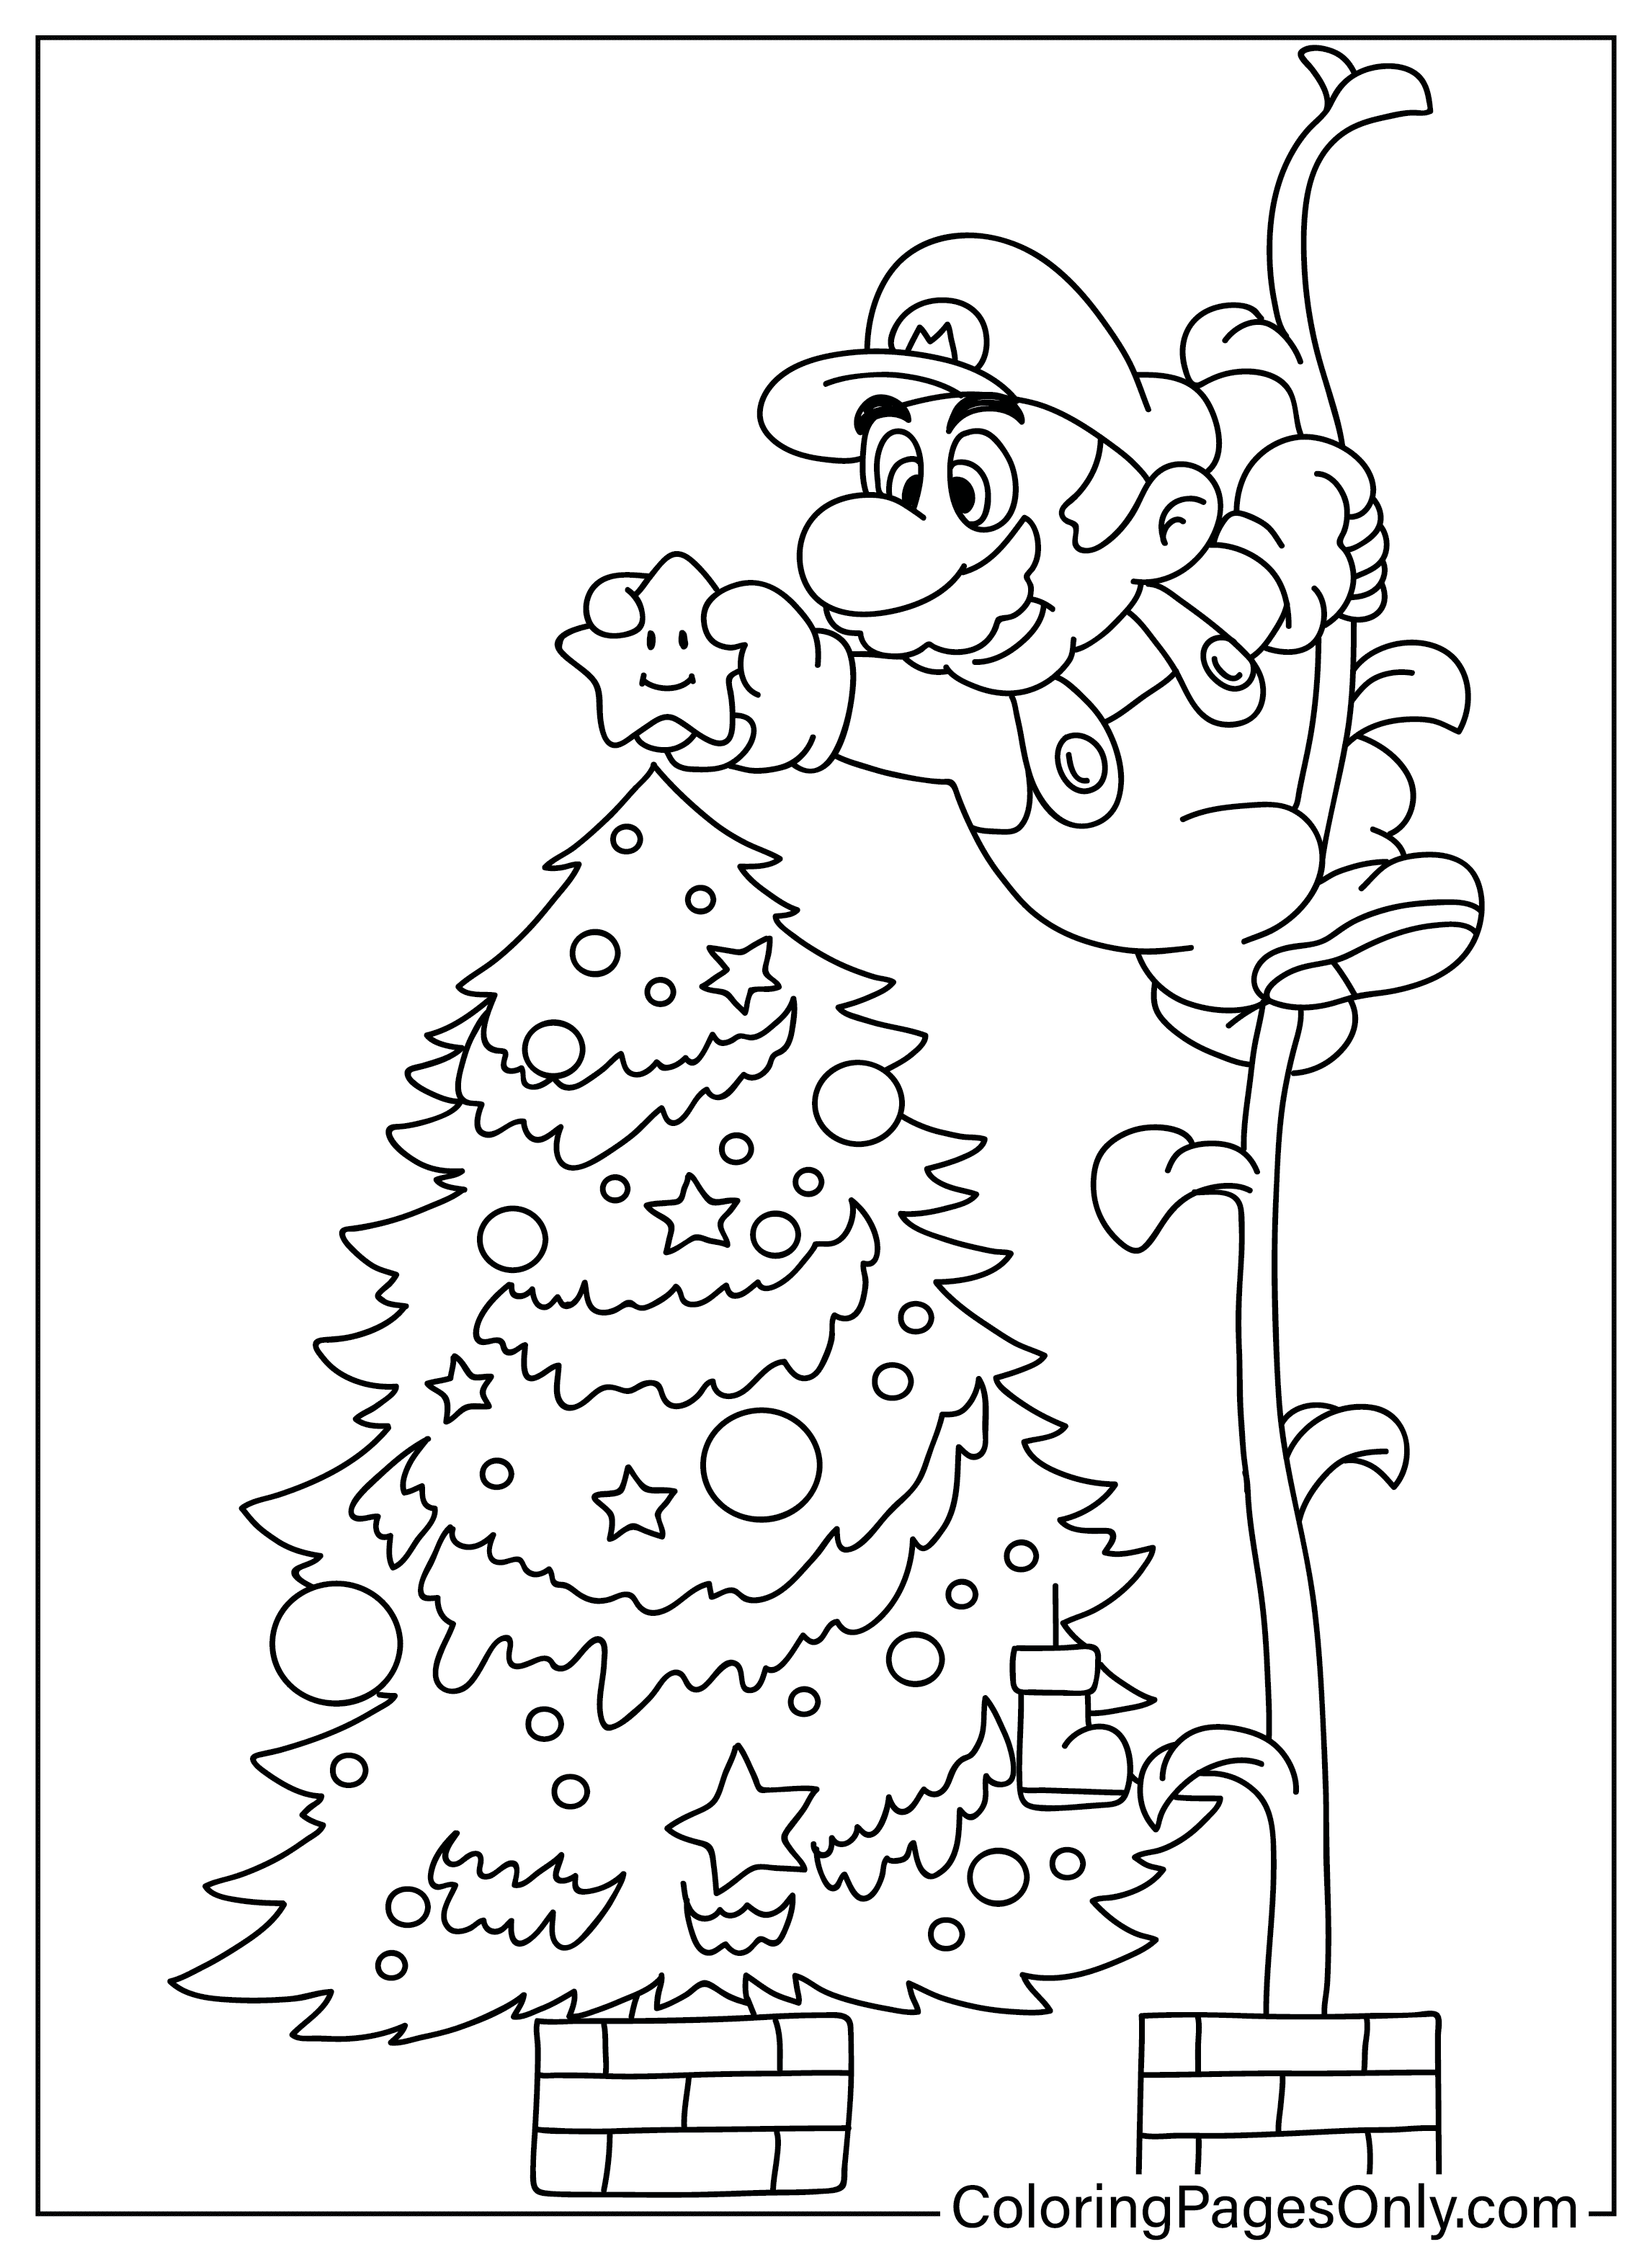 Christmas Mario Coloring Page from Christmas Cartoon